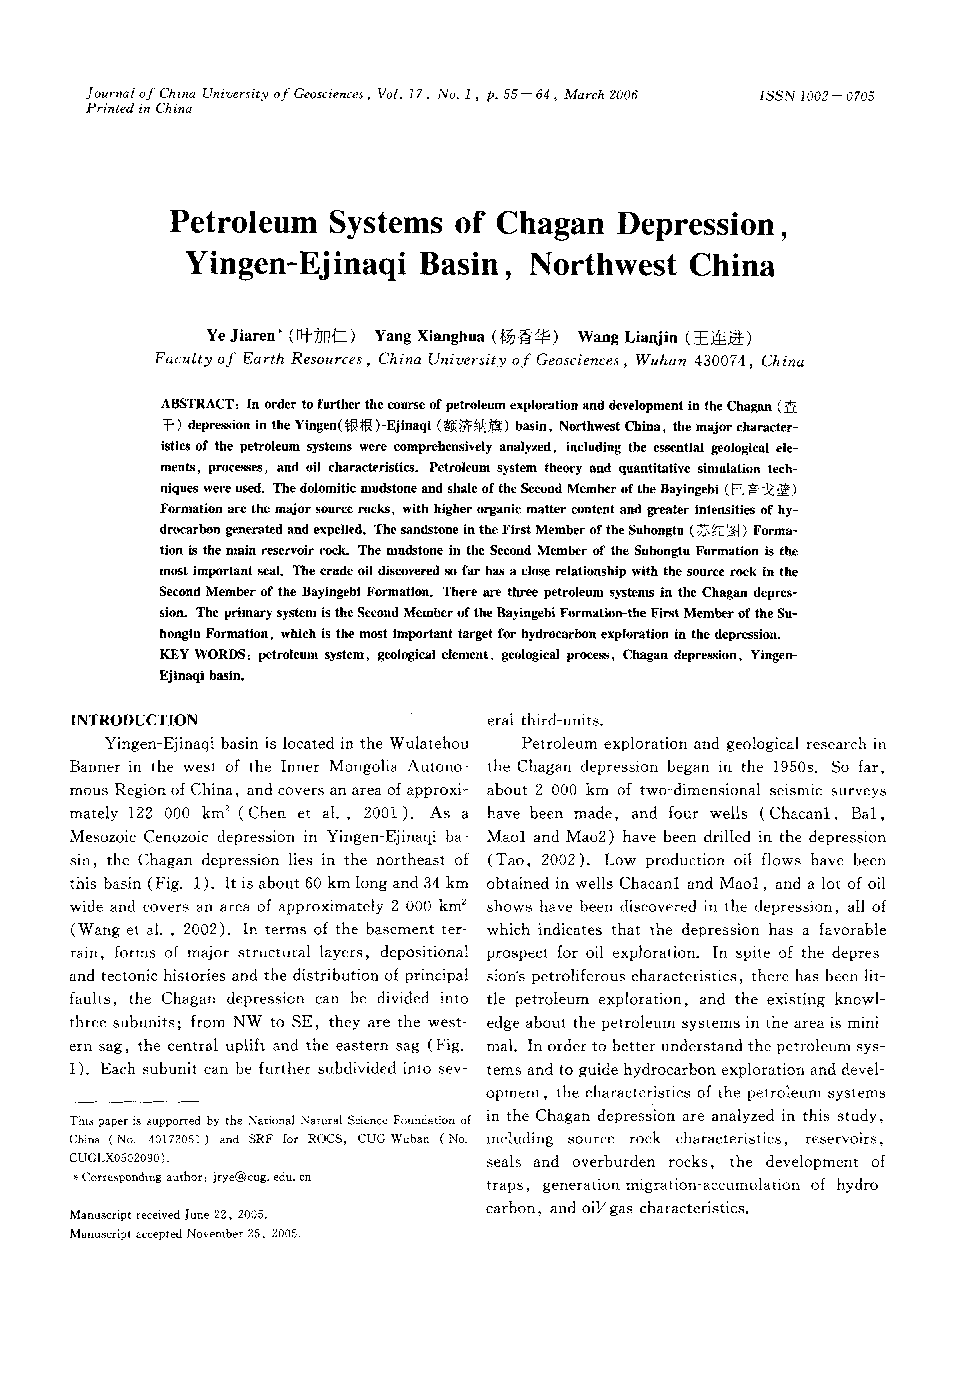 Petroleum Systems of Chagan Depression, Yingen-Ejinaqi Basin, Northwest China